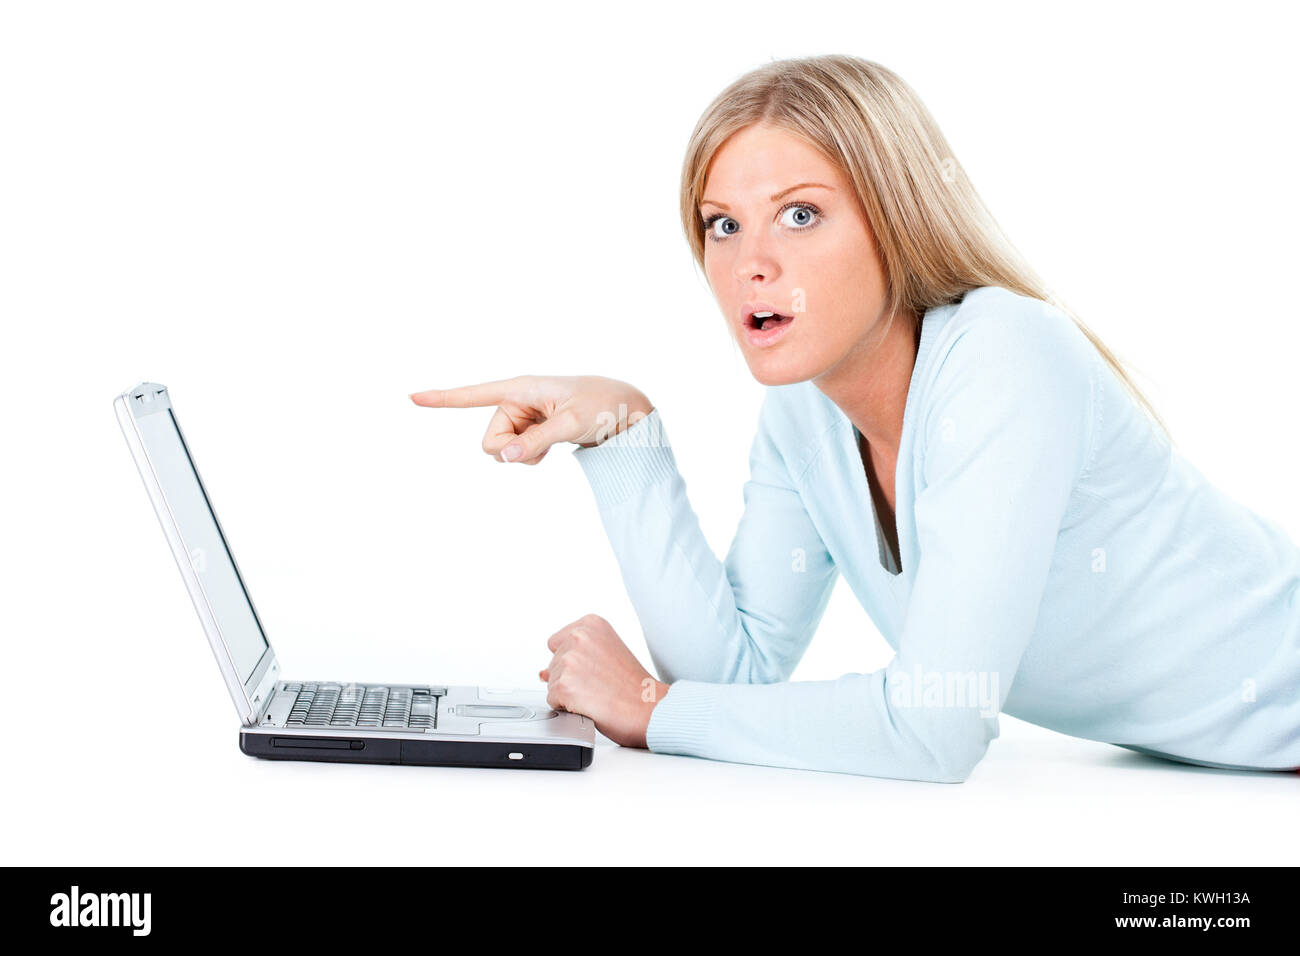 Beautiful blonde girl working on laptop, white background Stock Photo